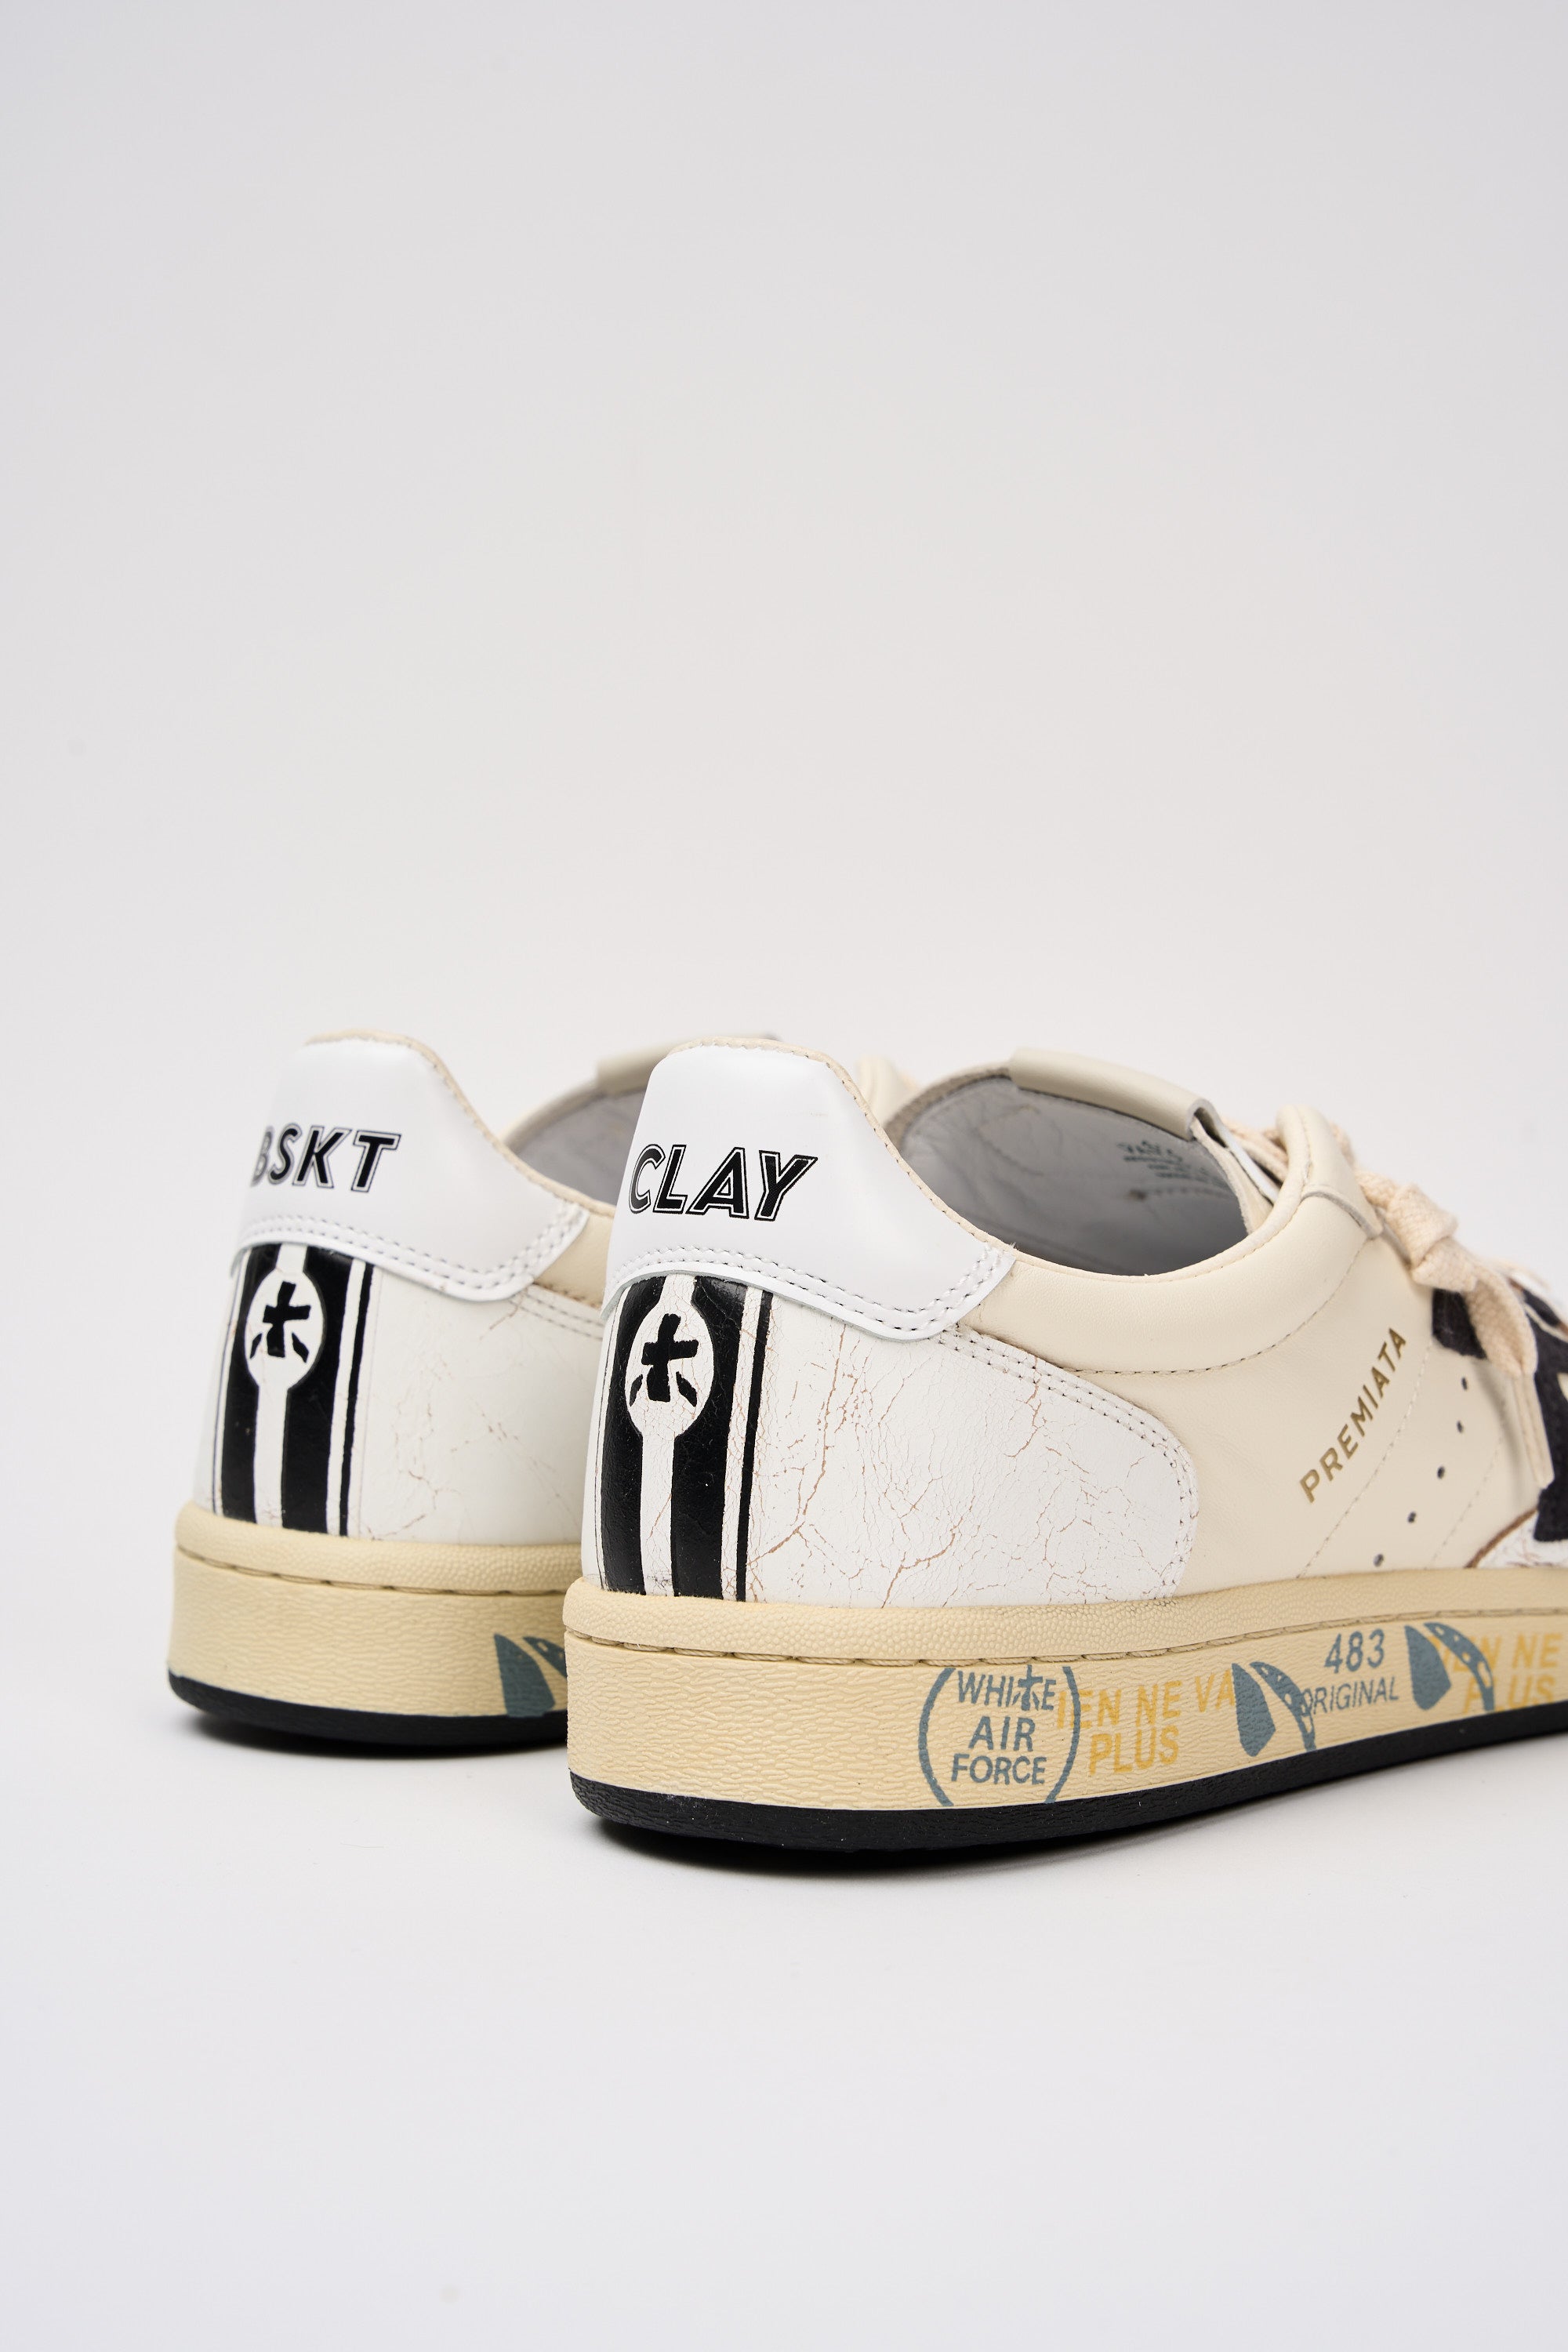 Premiata Sneaker Basket Clay in White Leather-6